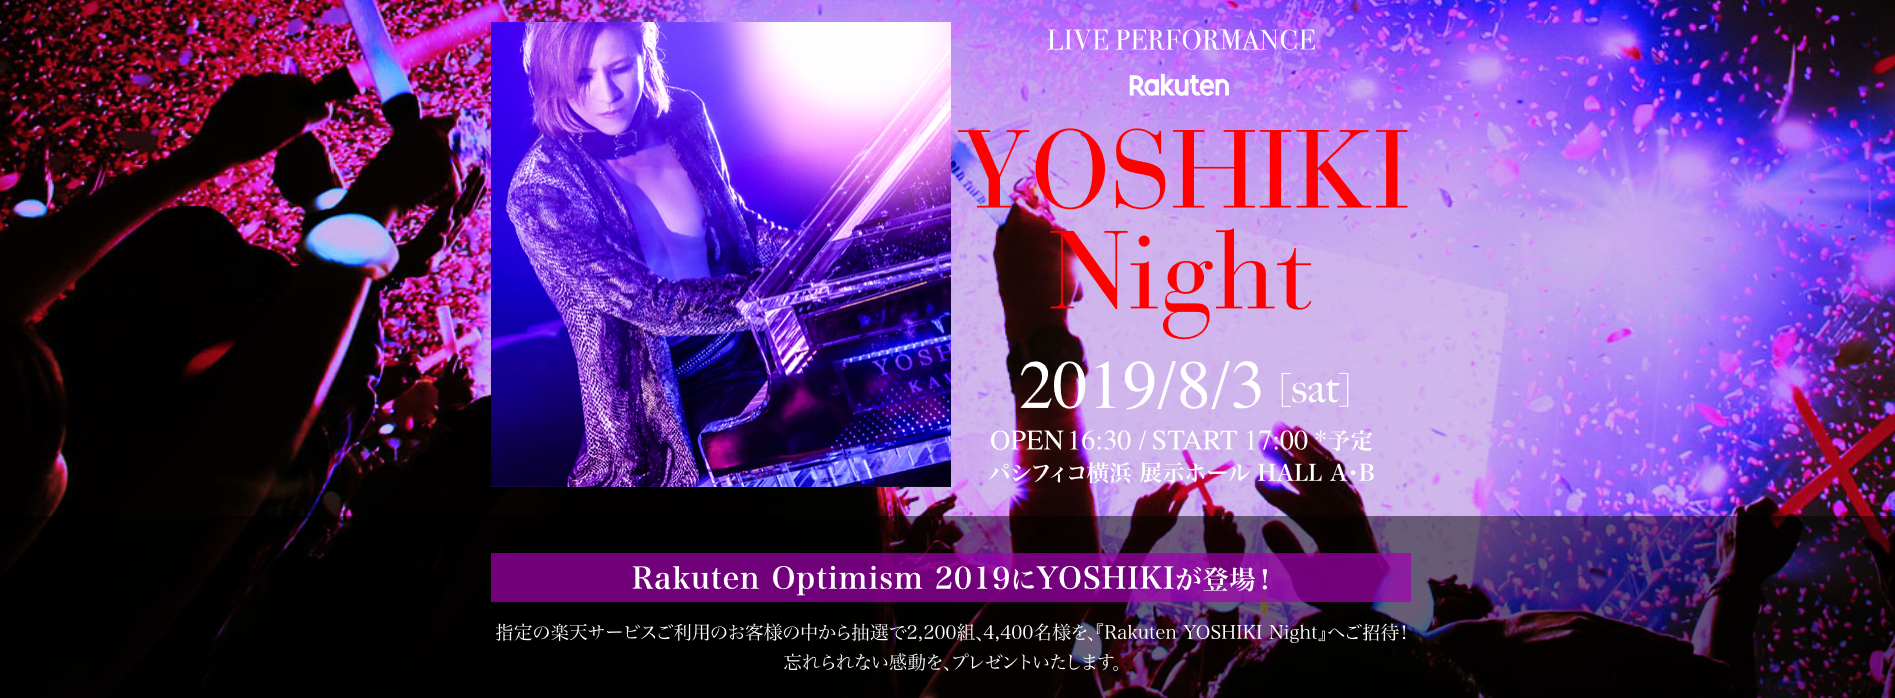 Rakuten Optimism 19 ライブパフォーマンス出演アーティストが X Japan のyoshikiさんに決定 楽天 株式会社のプレスリリース